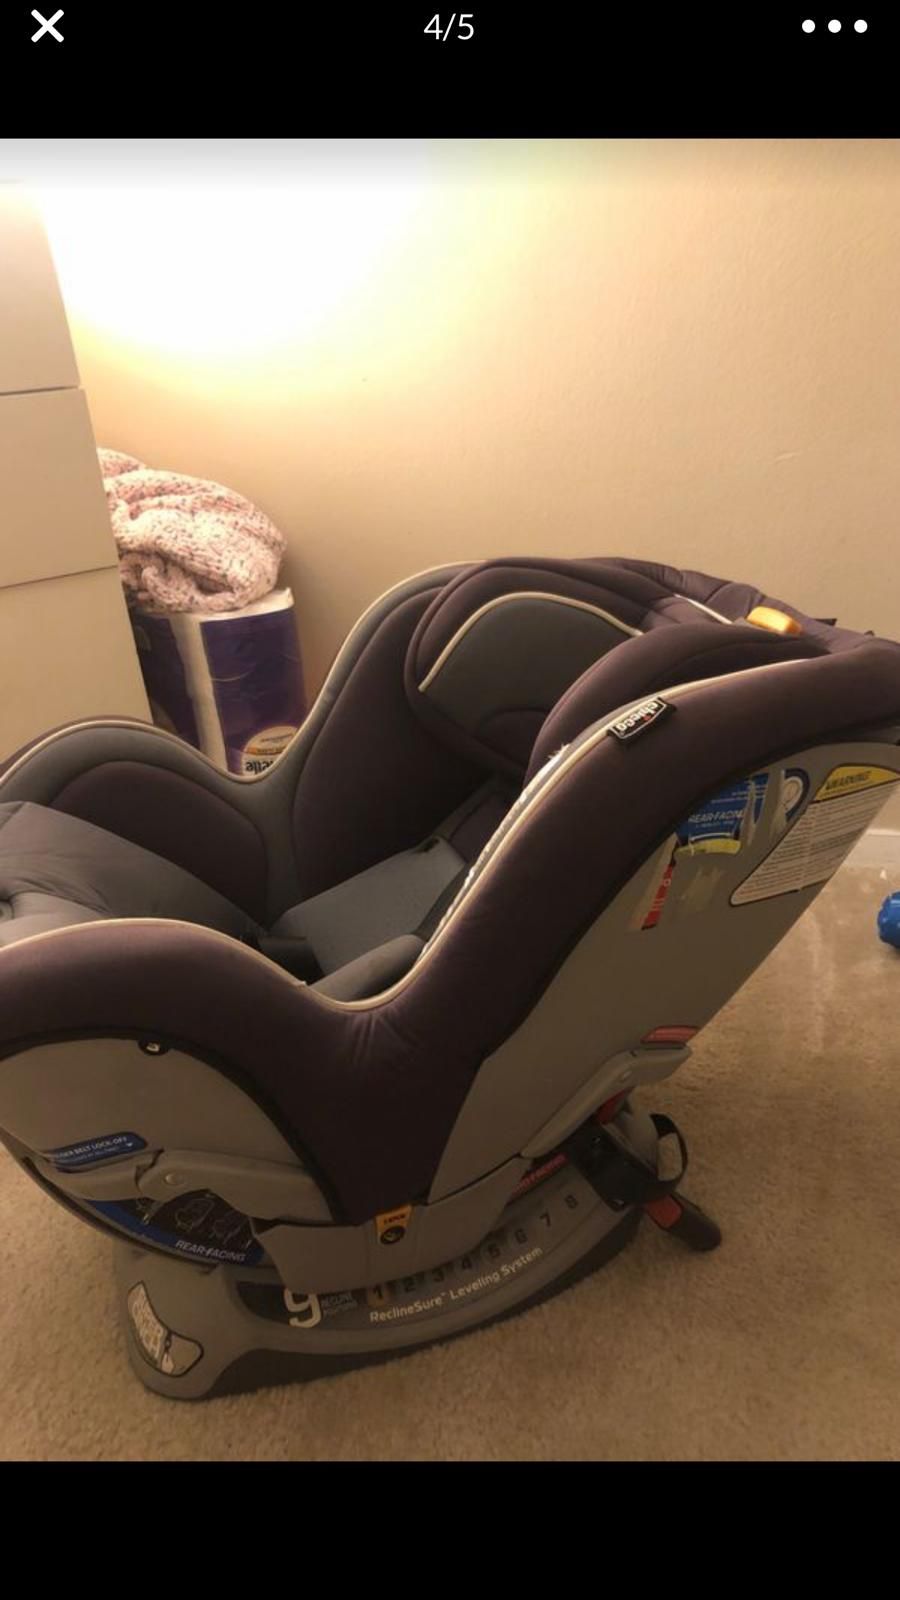 Baby car seat.dark purple and gray colors